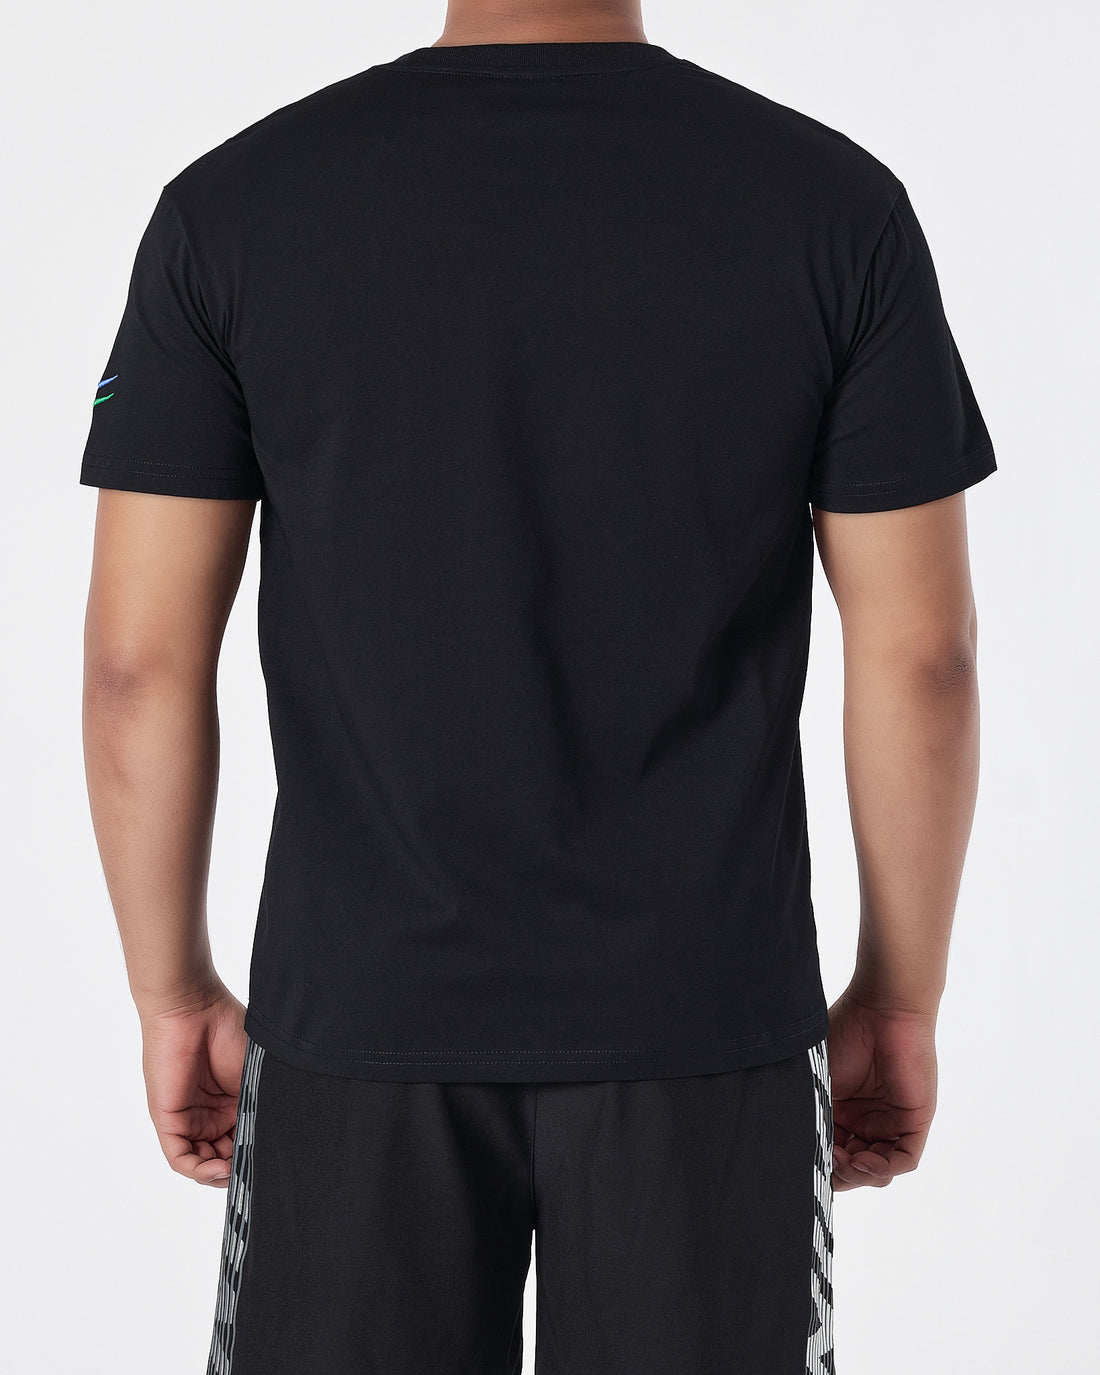 NIK Swooh Logo Embroidered Men Black Sport T-Shirt 13.90